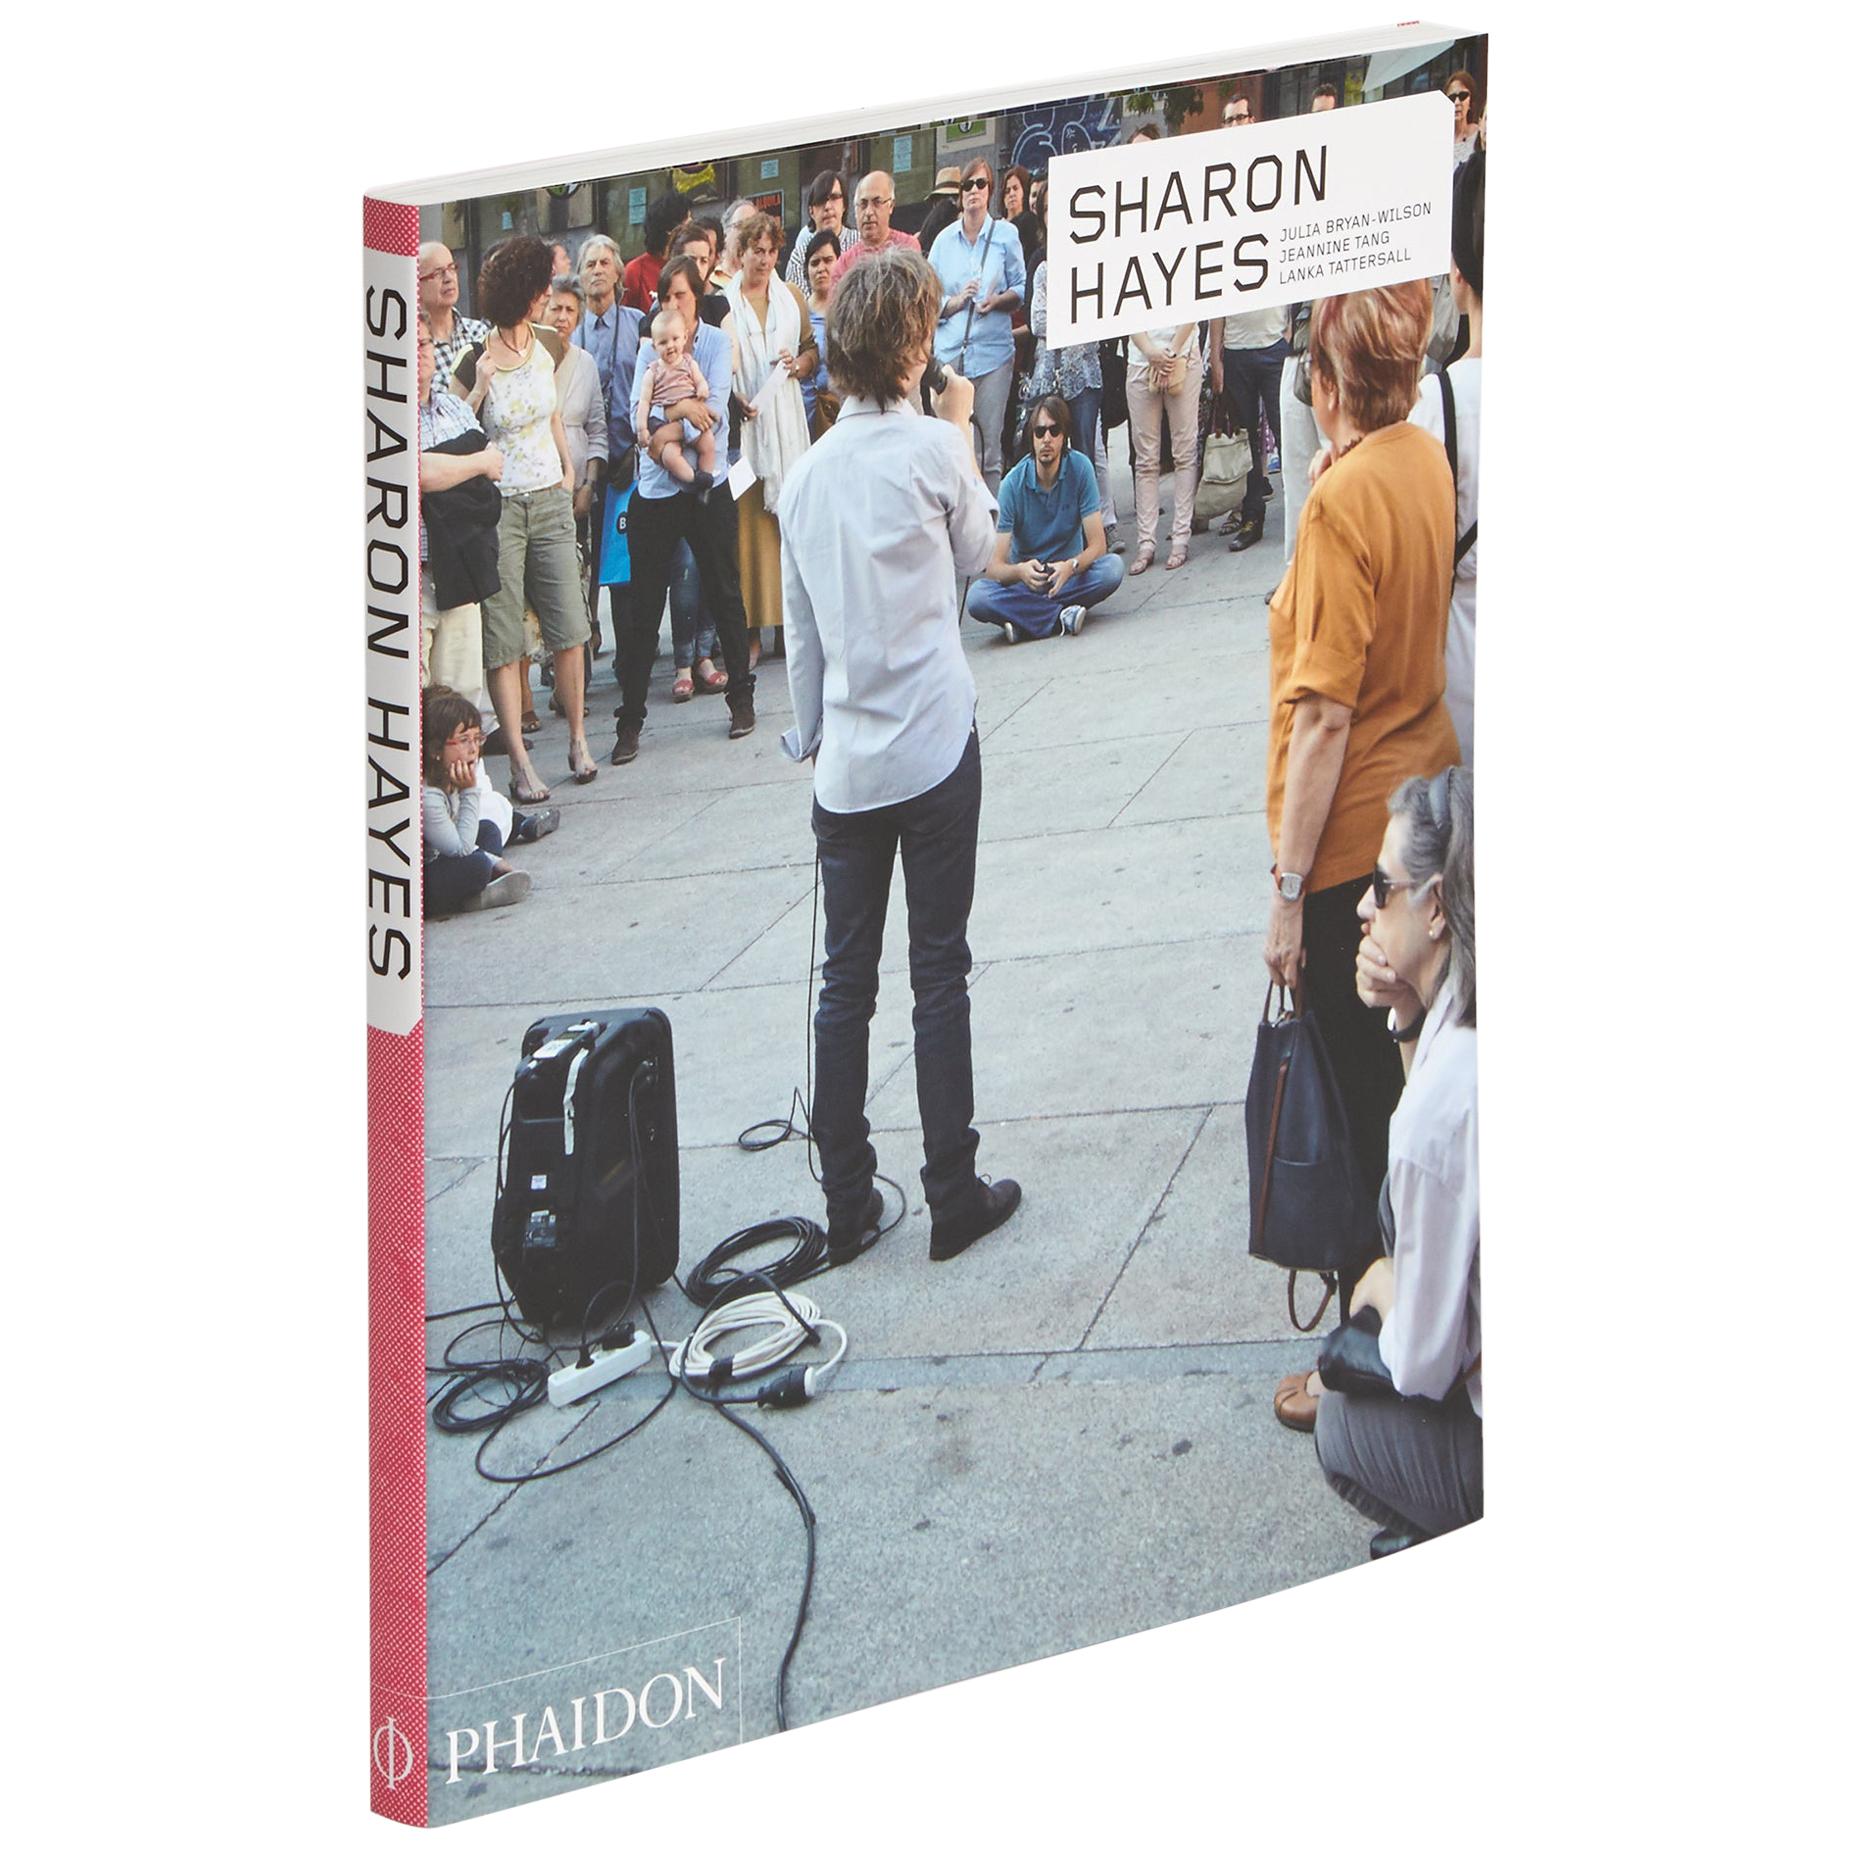 Sharon Hayes : "Phaidon Contemporary Artists Series".